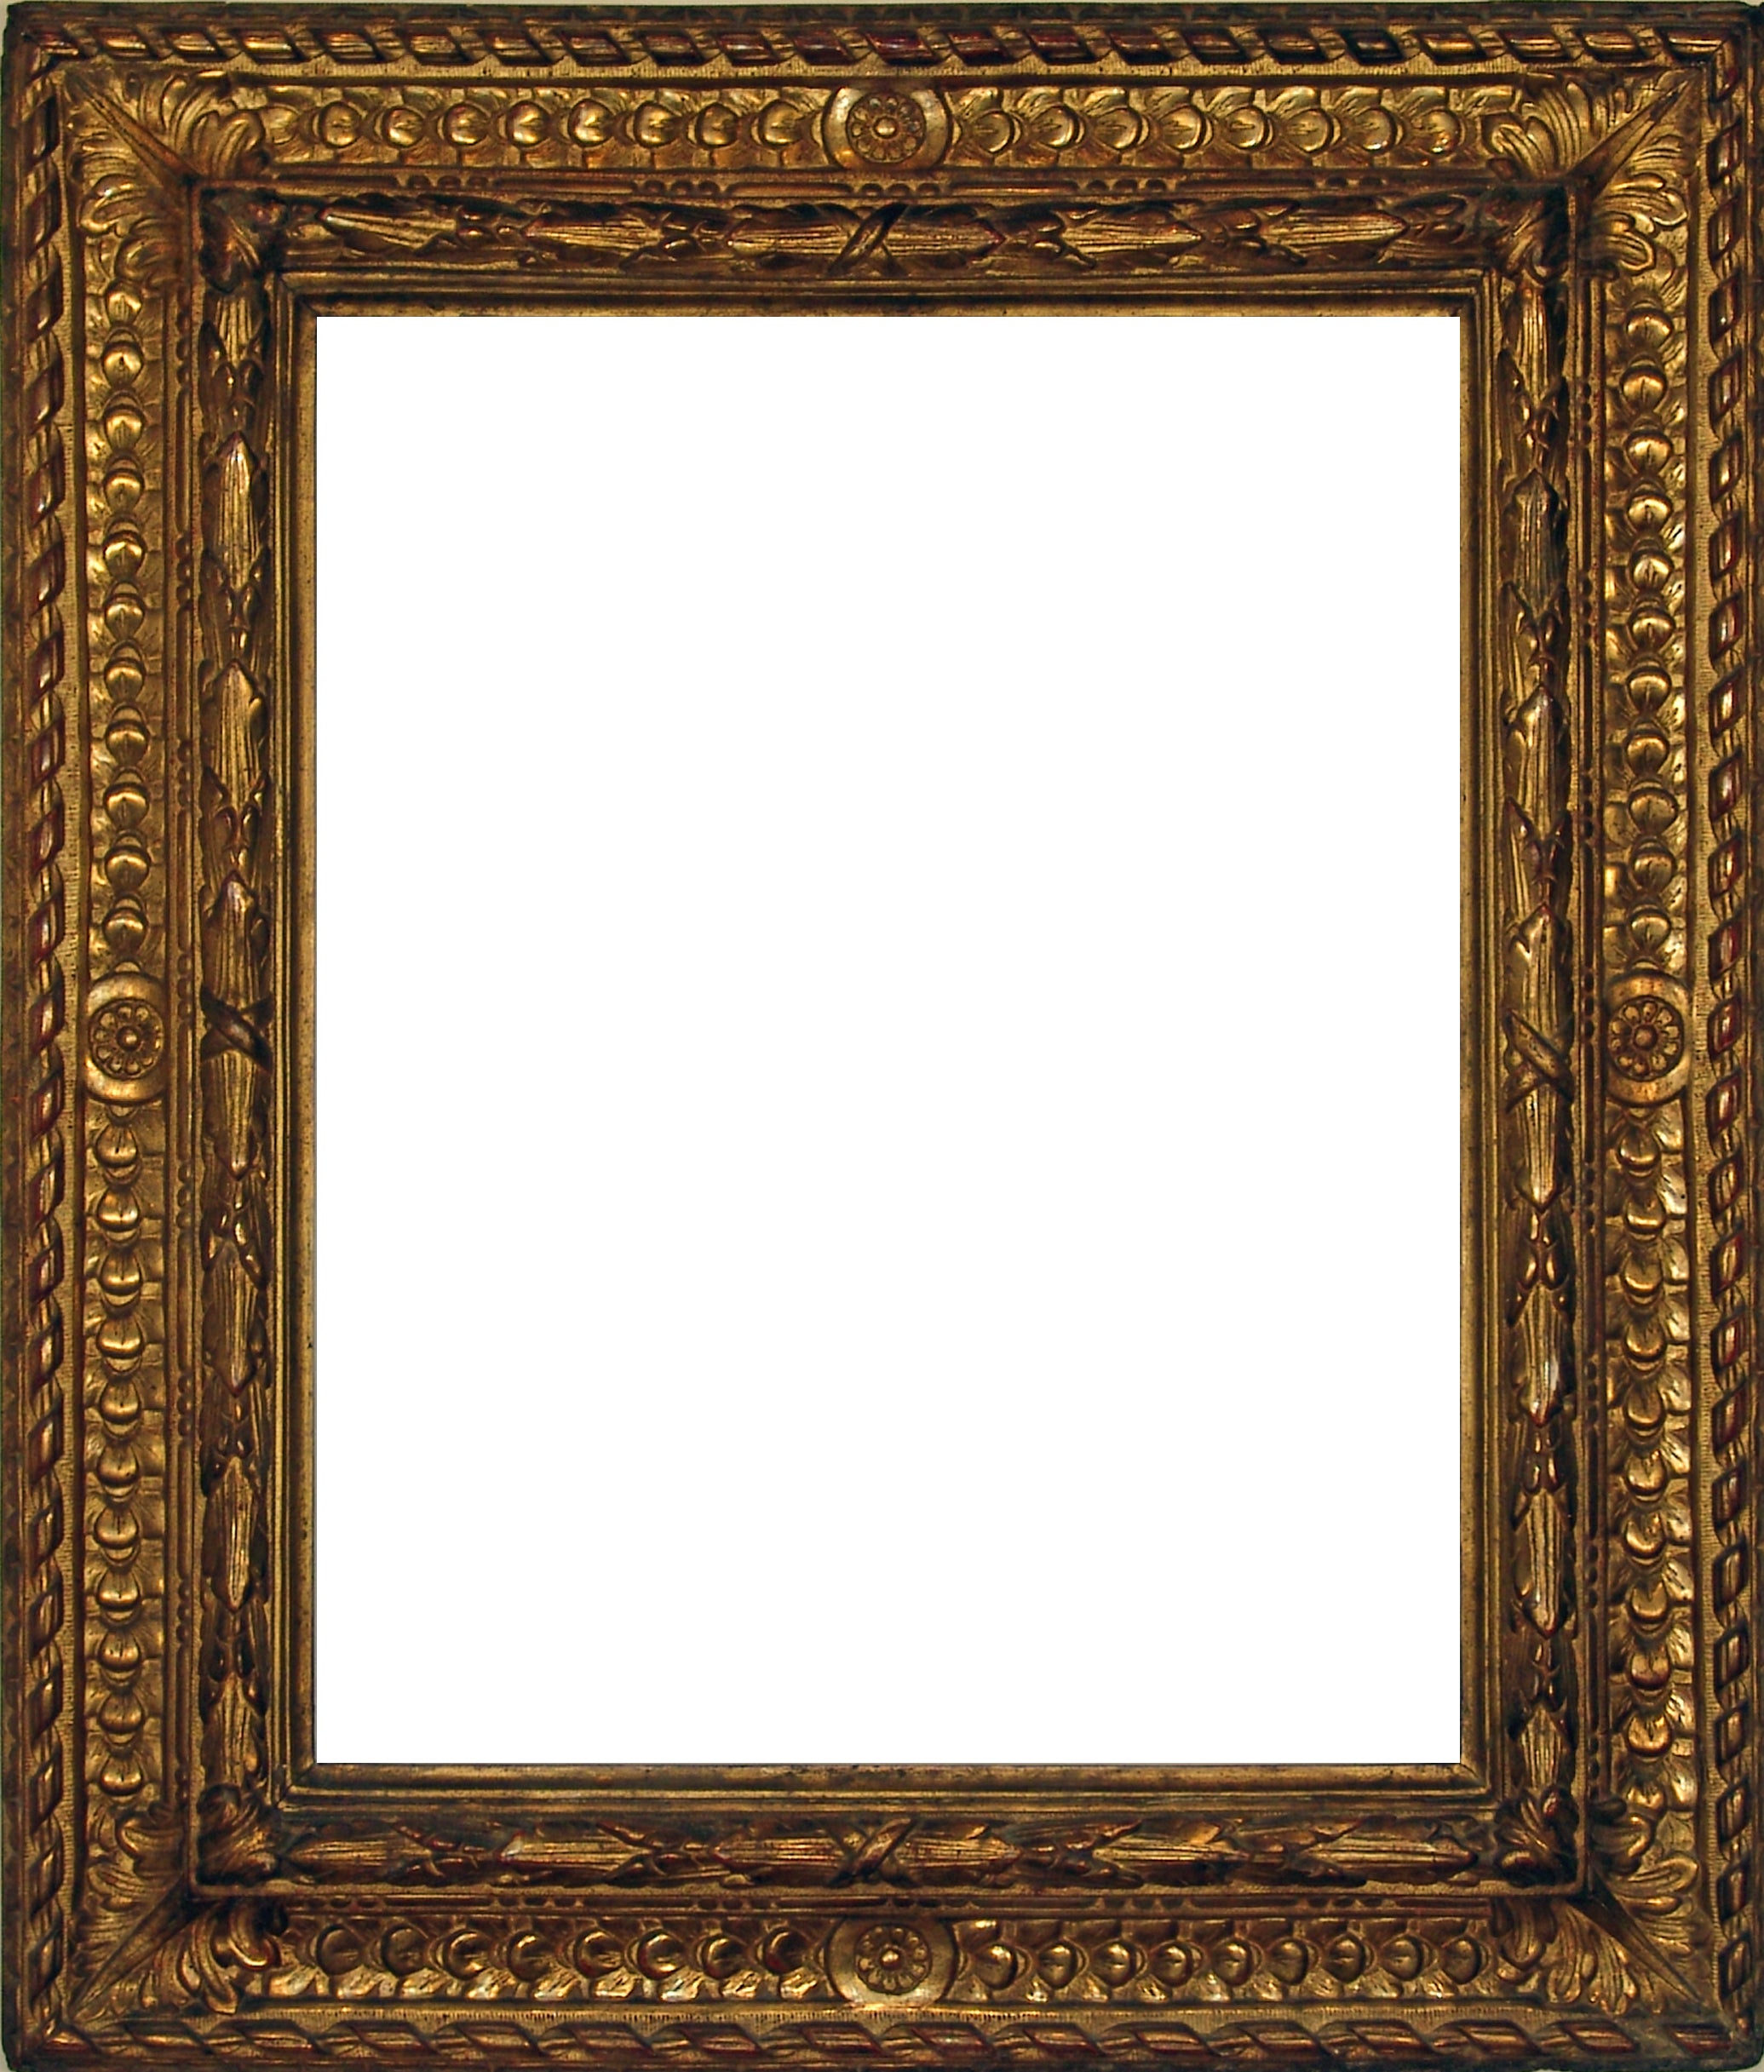 C. 17th Century Italian Gilded Wood Frame. For Sale